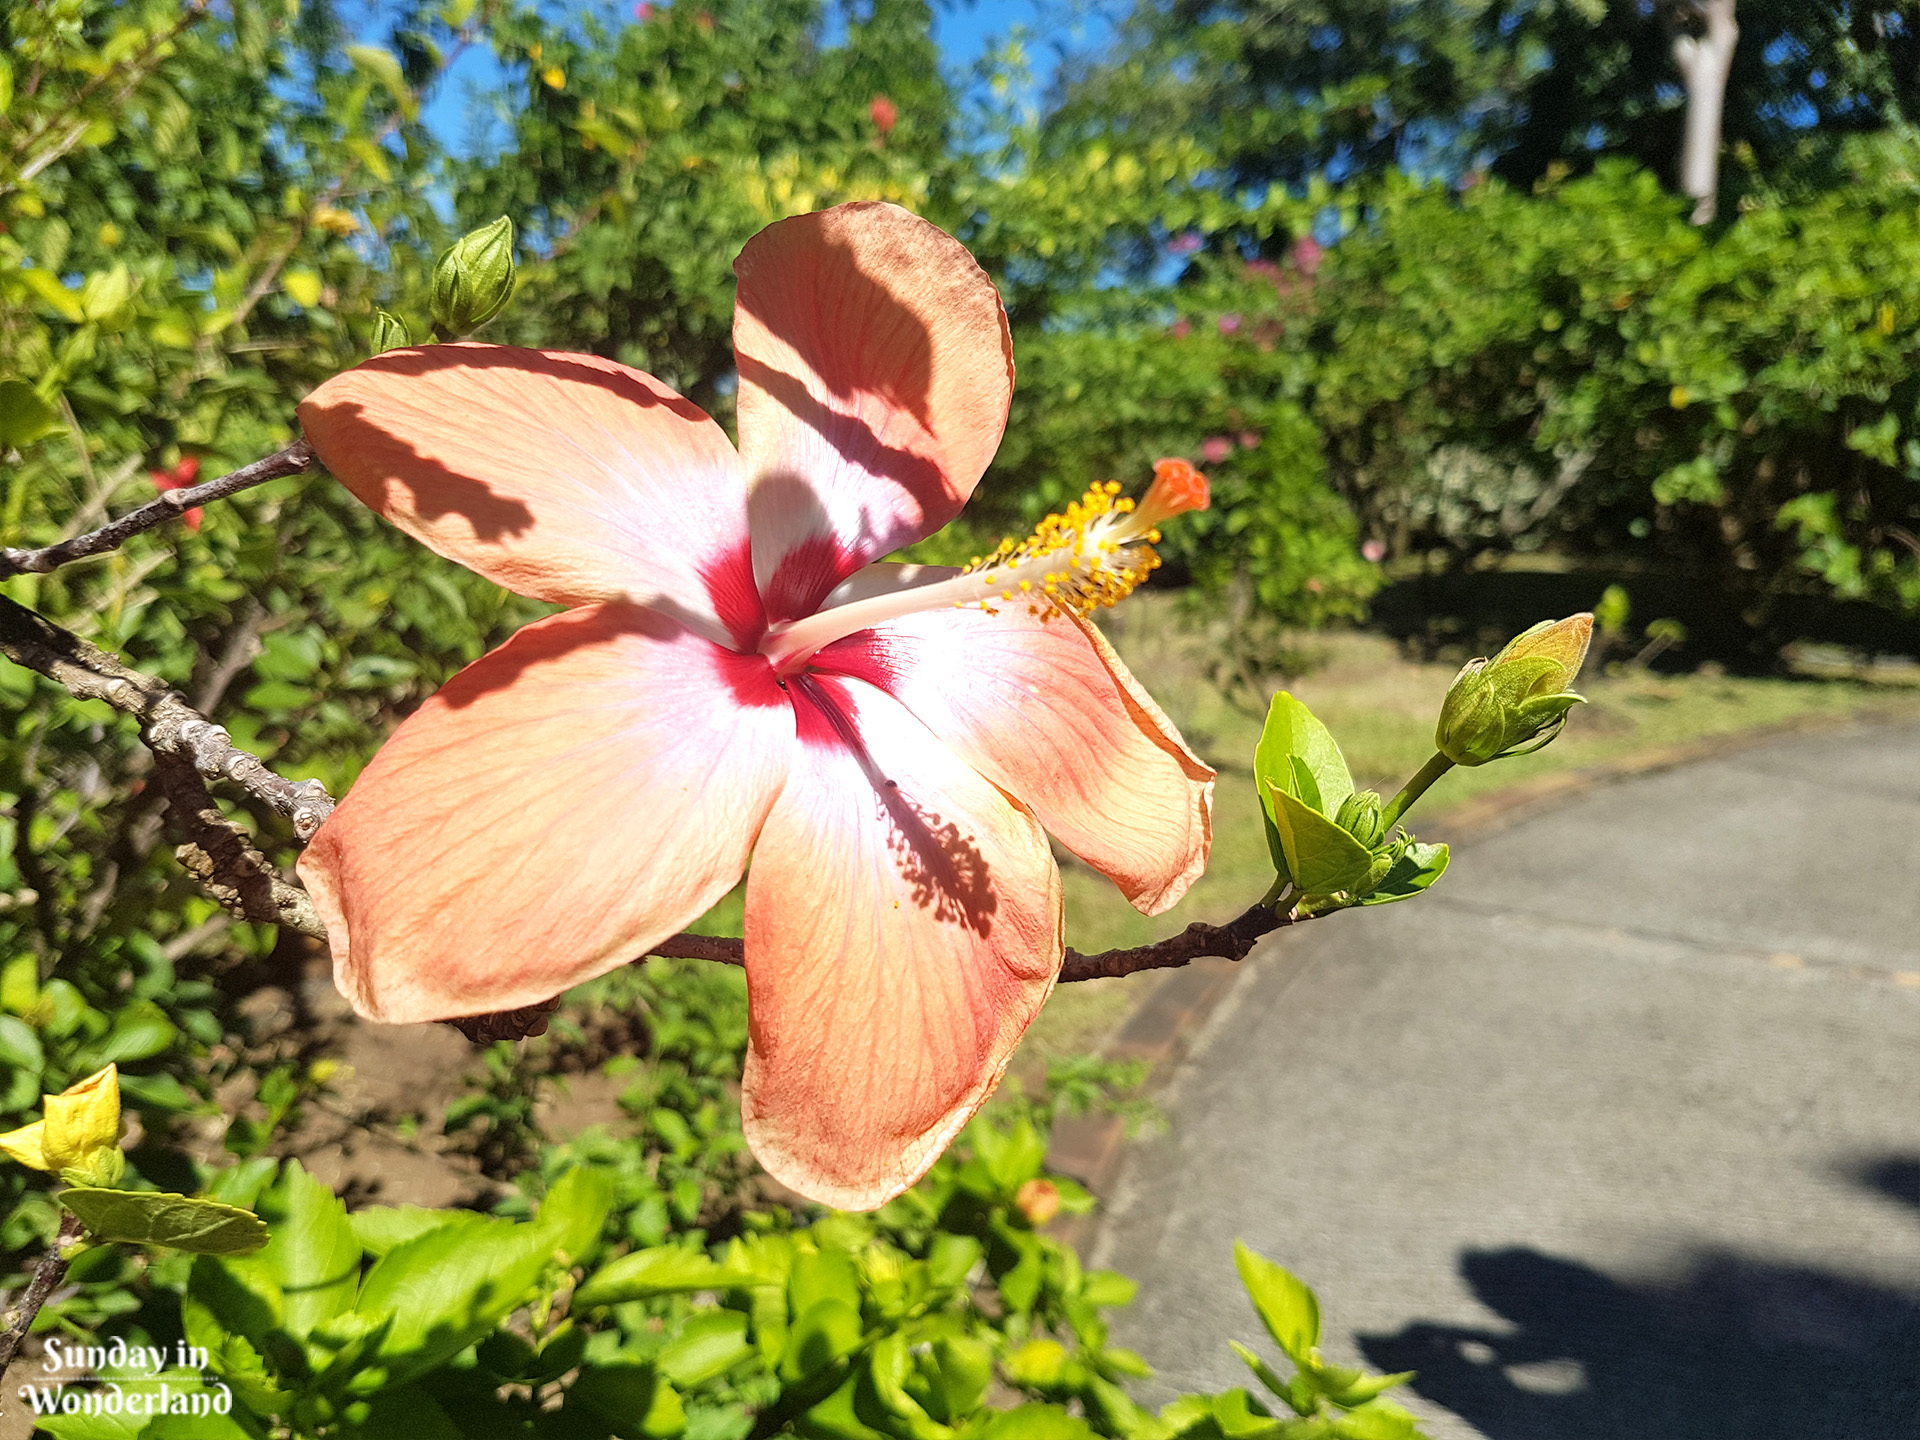 A beautiful flower in Botanical Garden in Deshaies in Guadeloupe - Sunday in Wonderland Blog